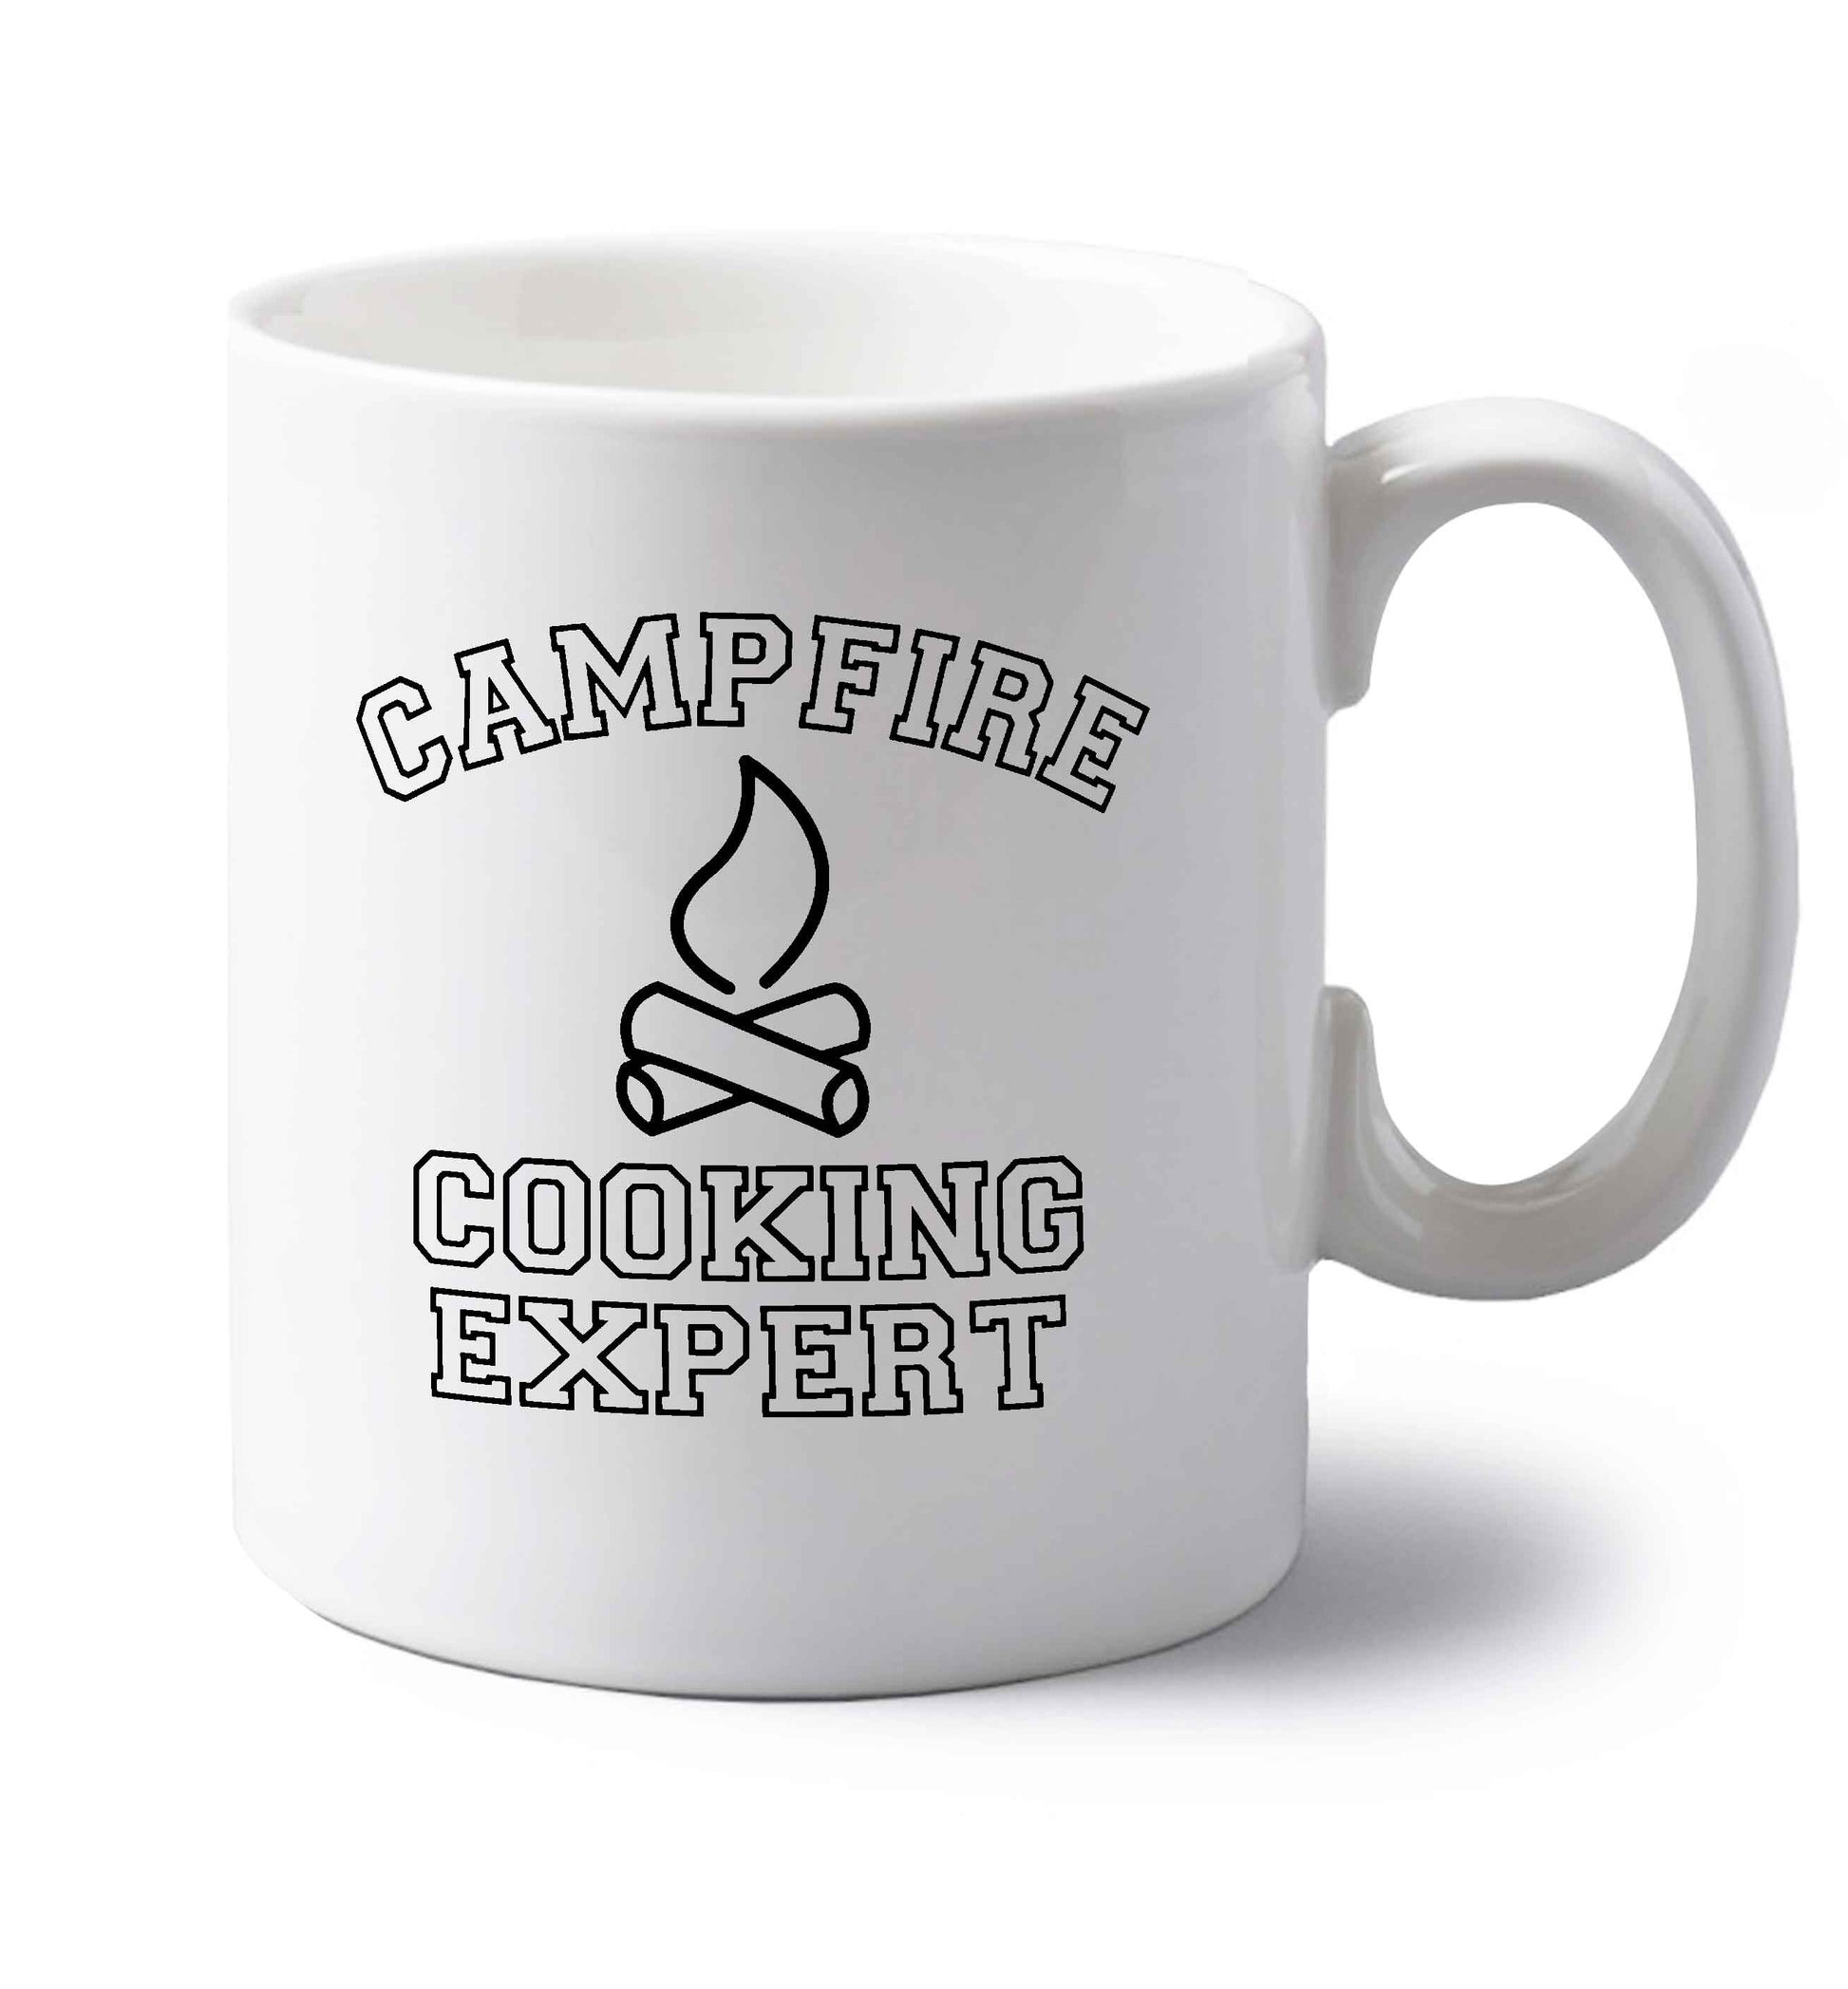 Campfire cooking expert left handed white ceramic mug 